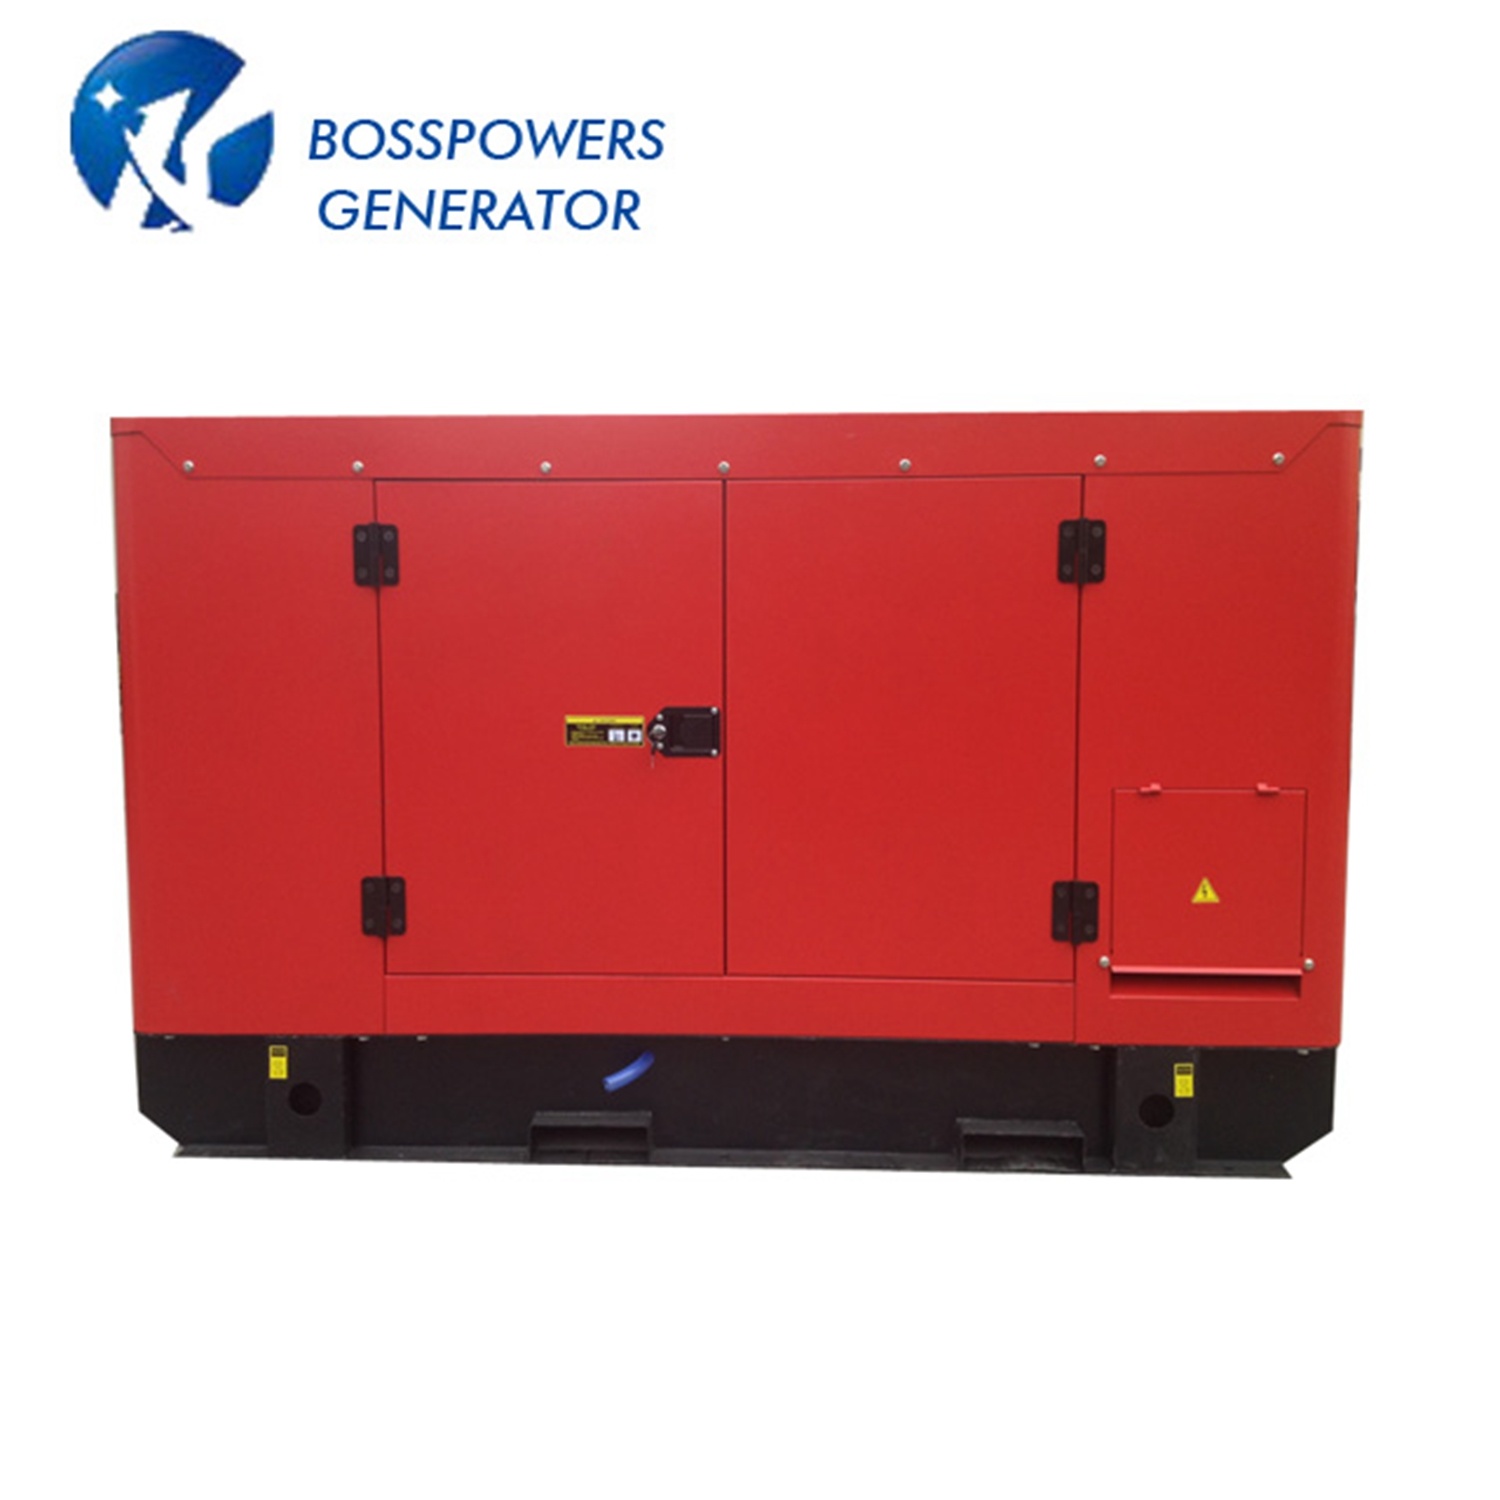 250kw Prime Power Diesel Generator Digital Controller Powered by Bf6m1015c-La-G3a